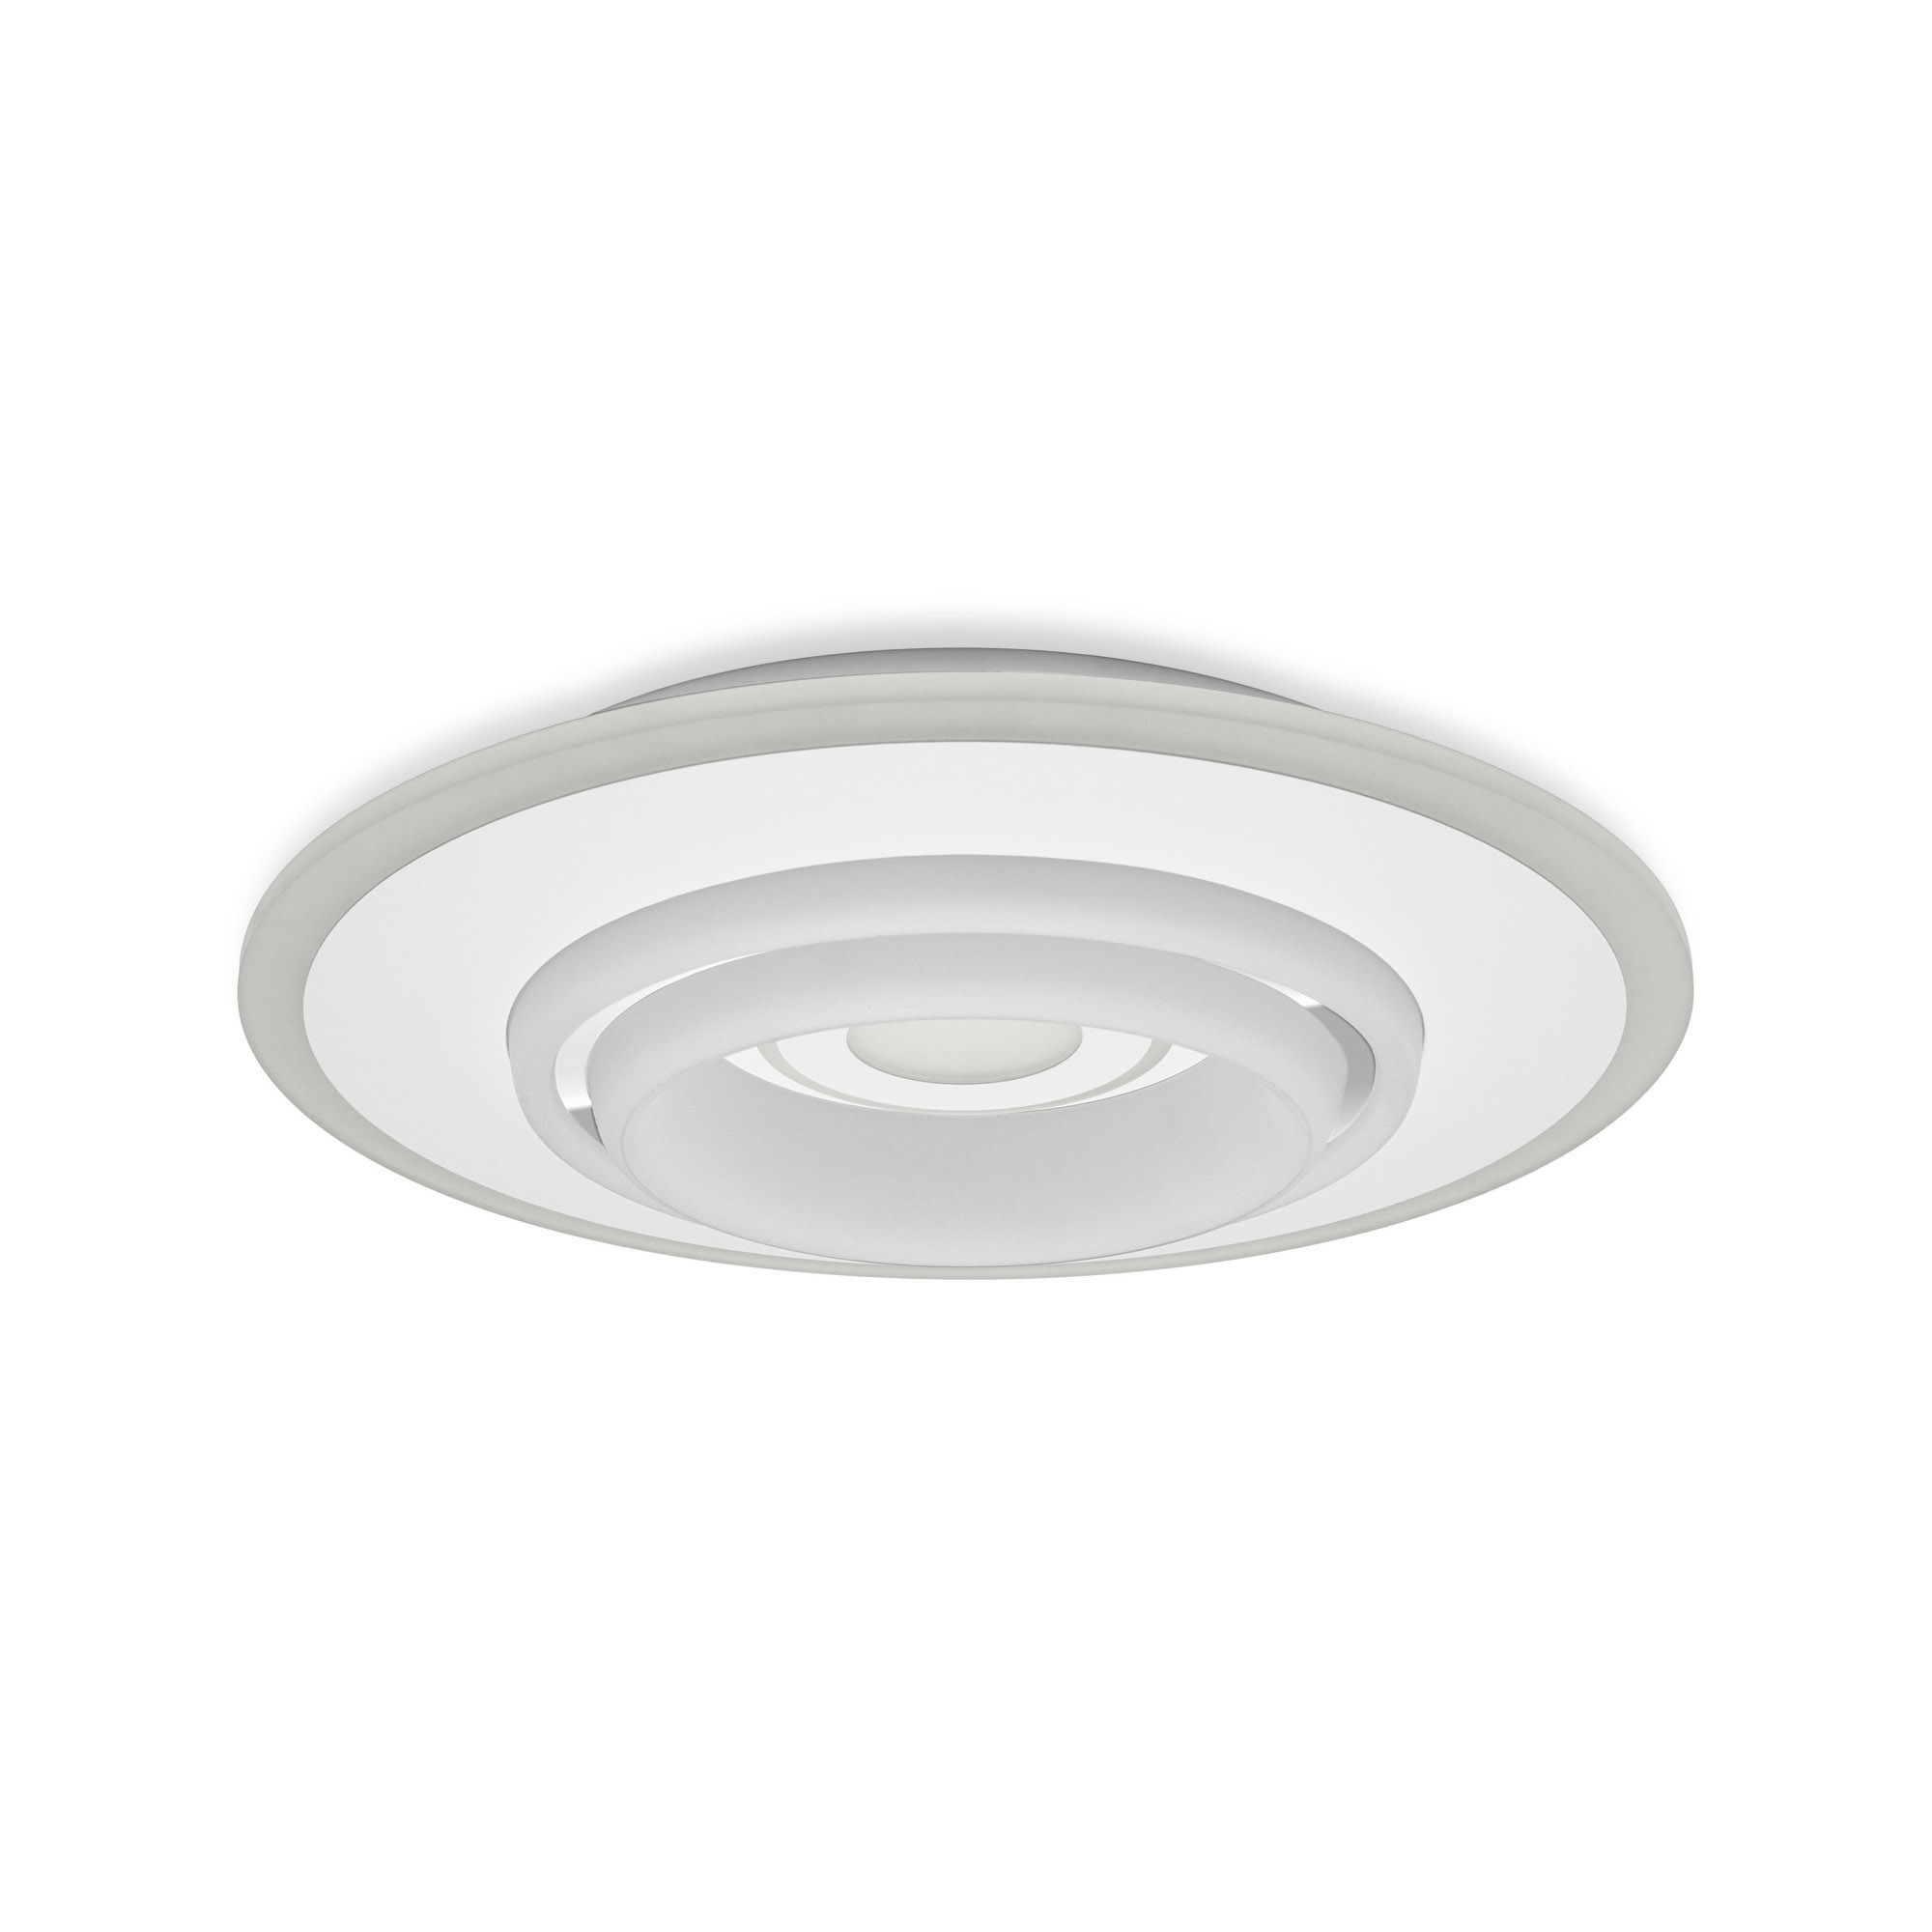 LEDVANCE SMART+ WiFi Tunable White RGB LED Ceiling Light ORBIS Rumor 500mm grey 3300lm